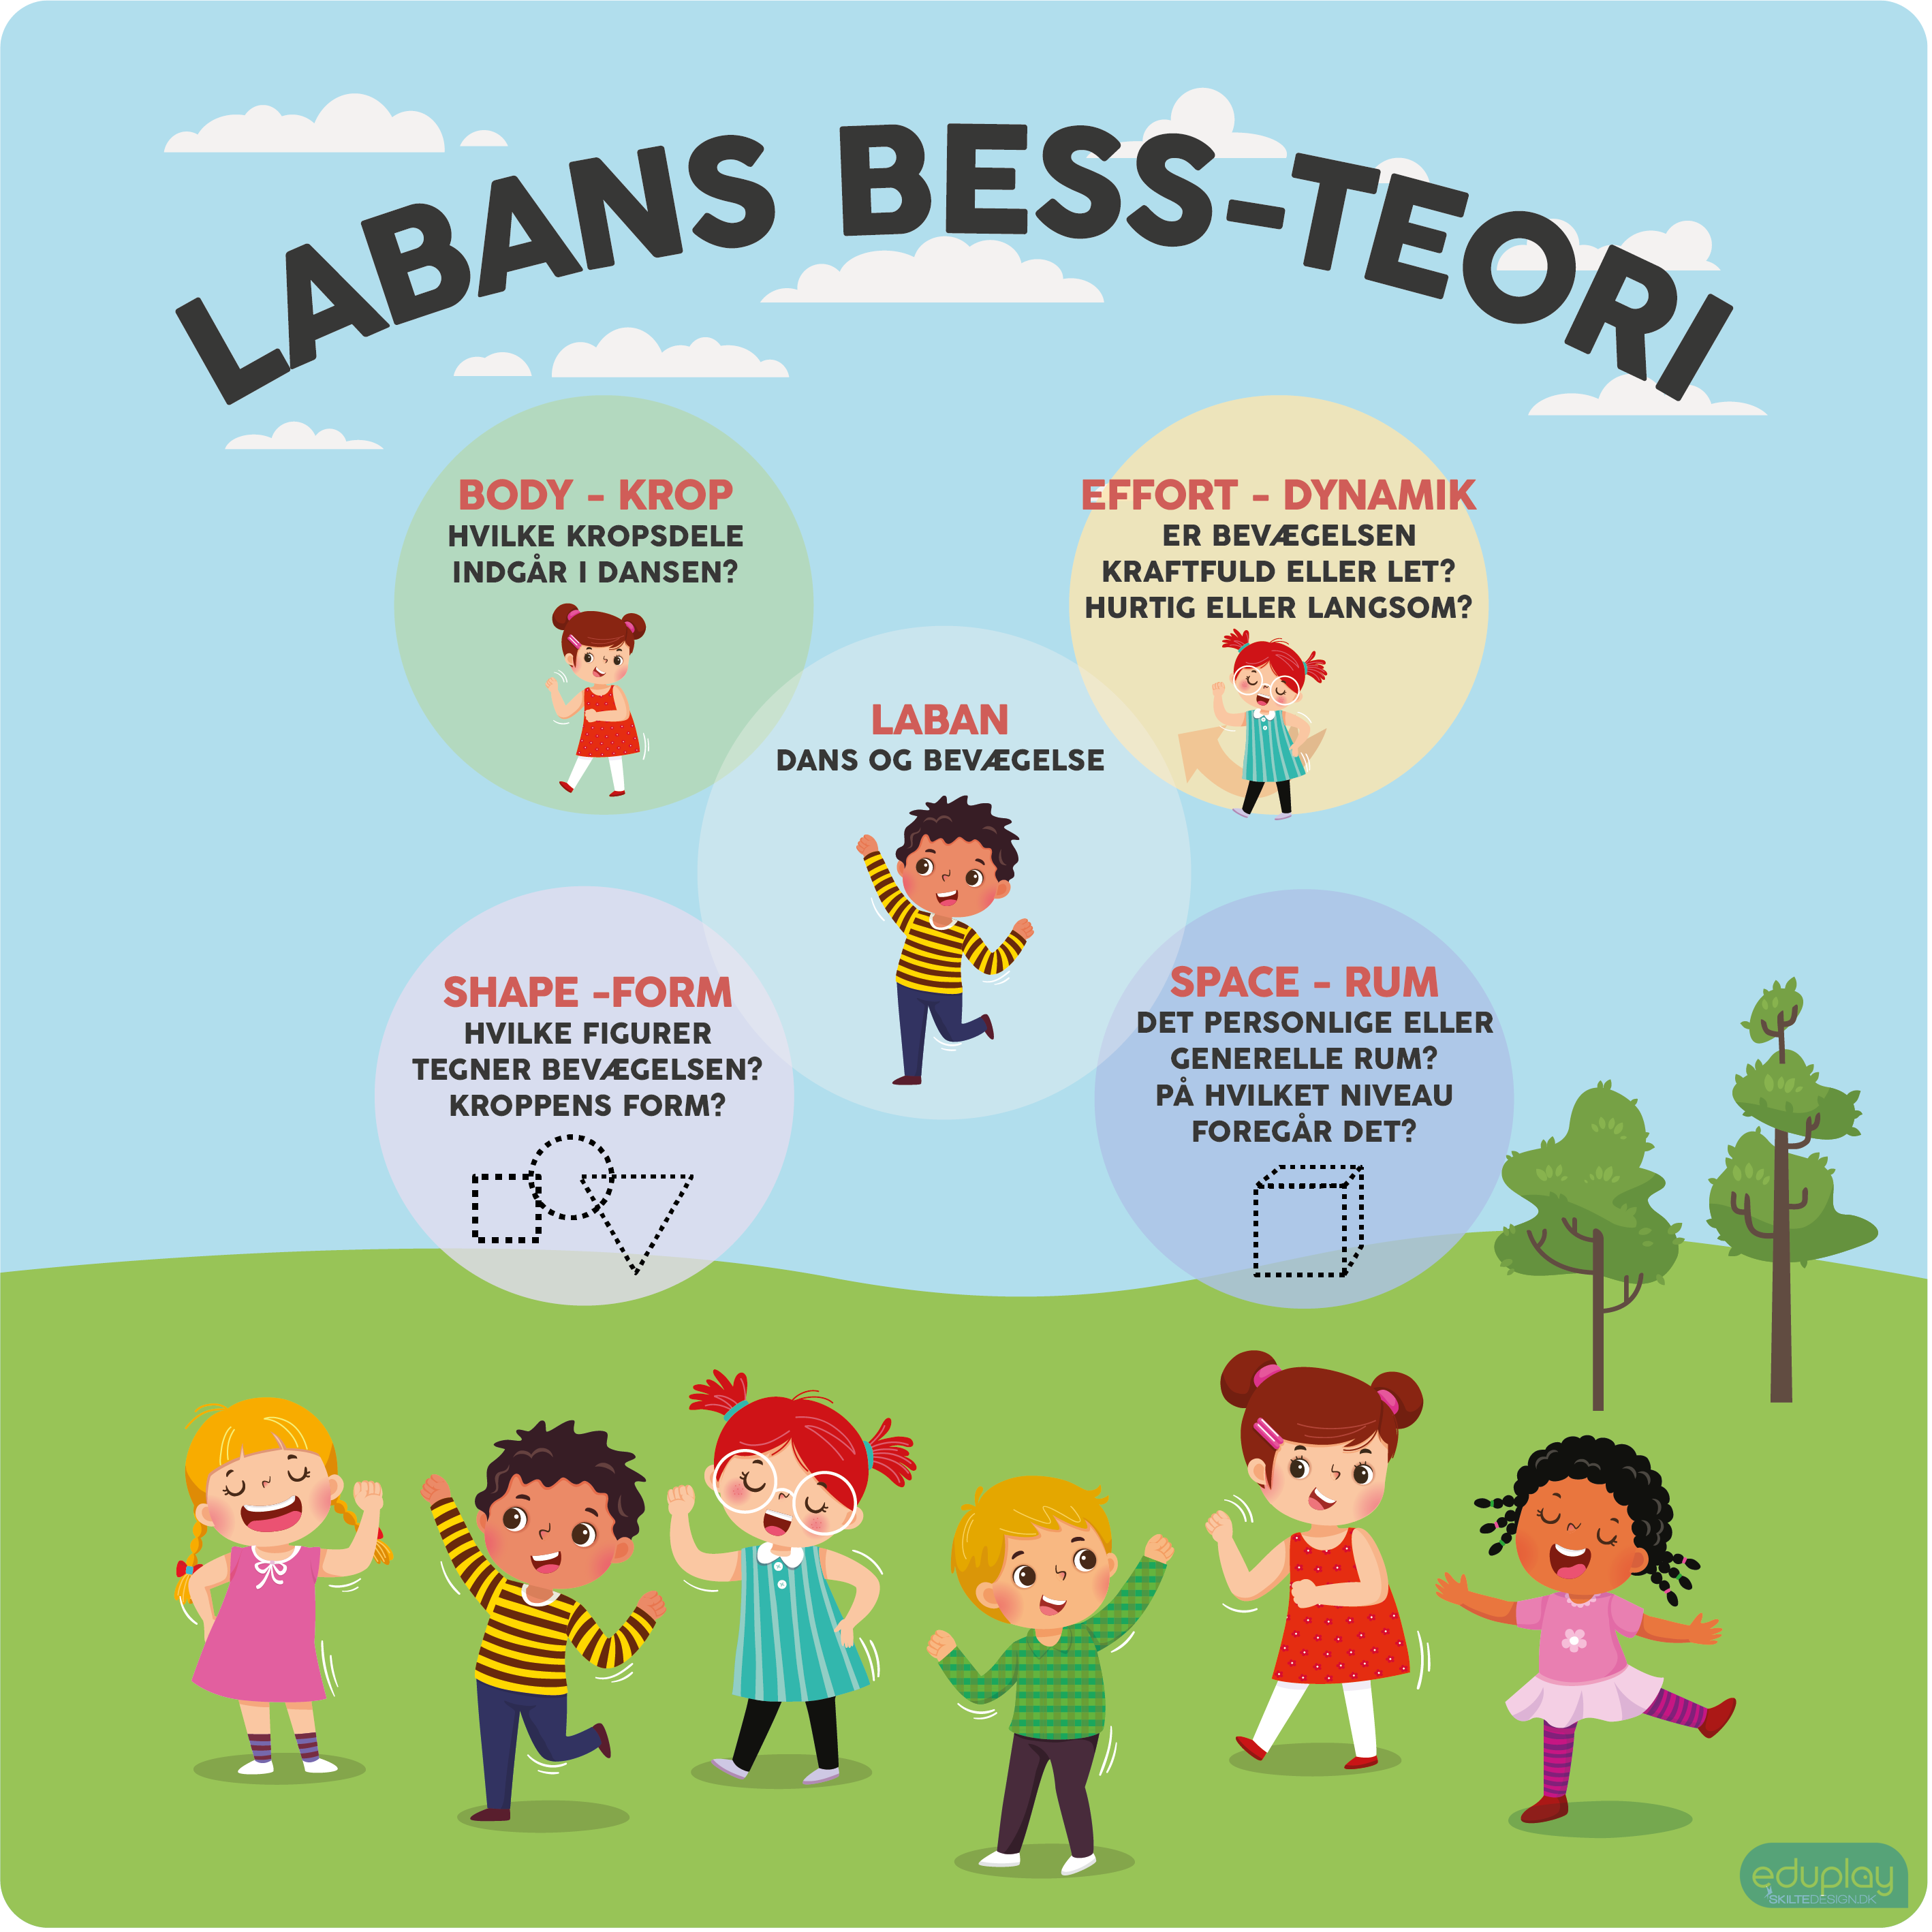 Labans bess-teori